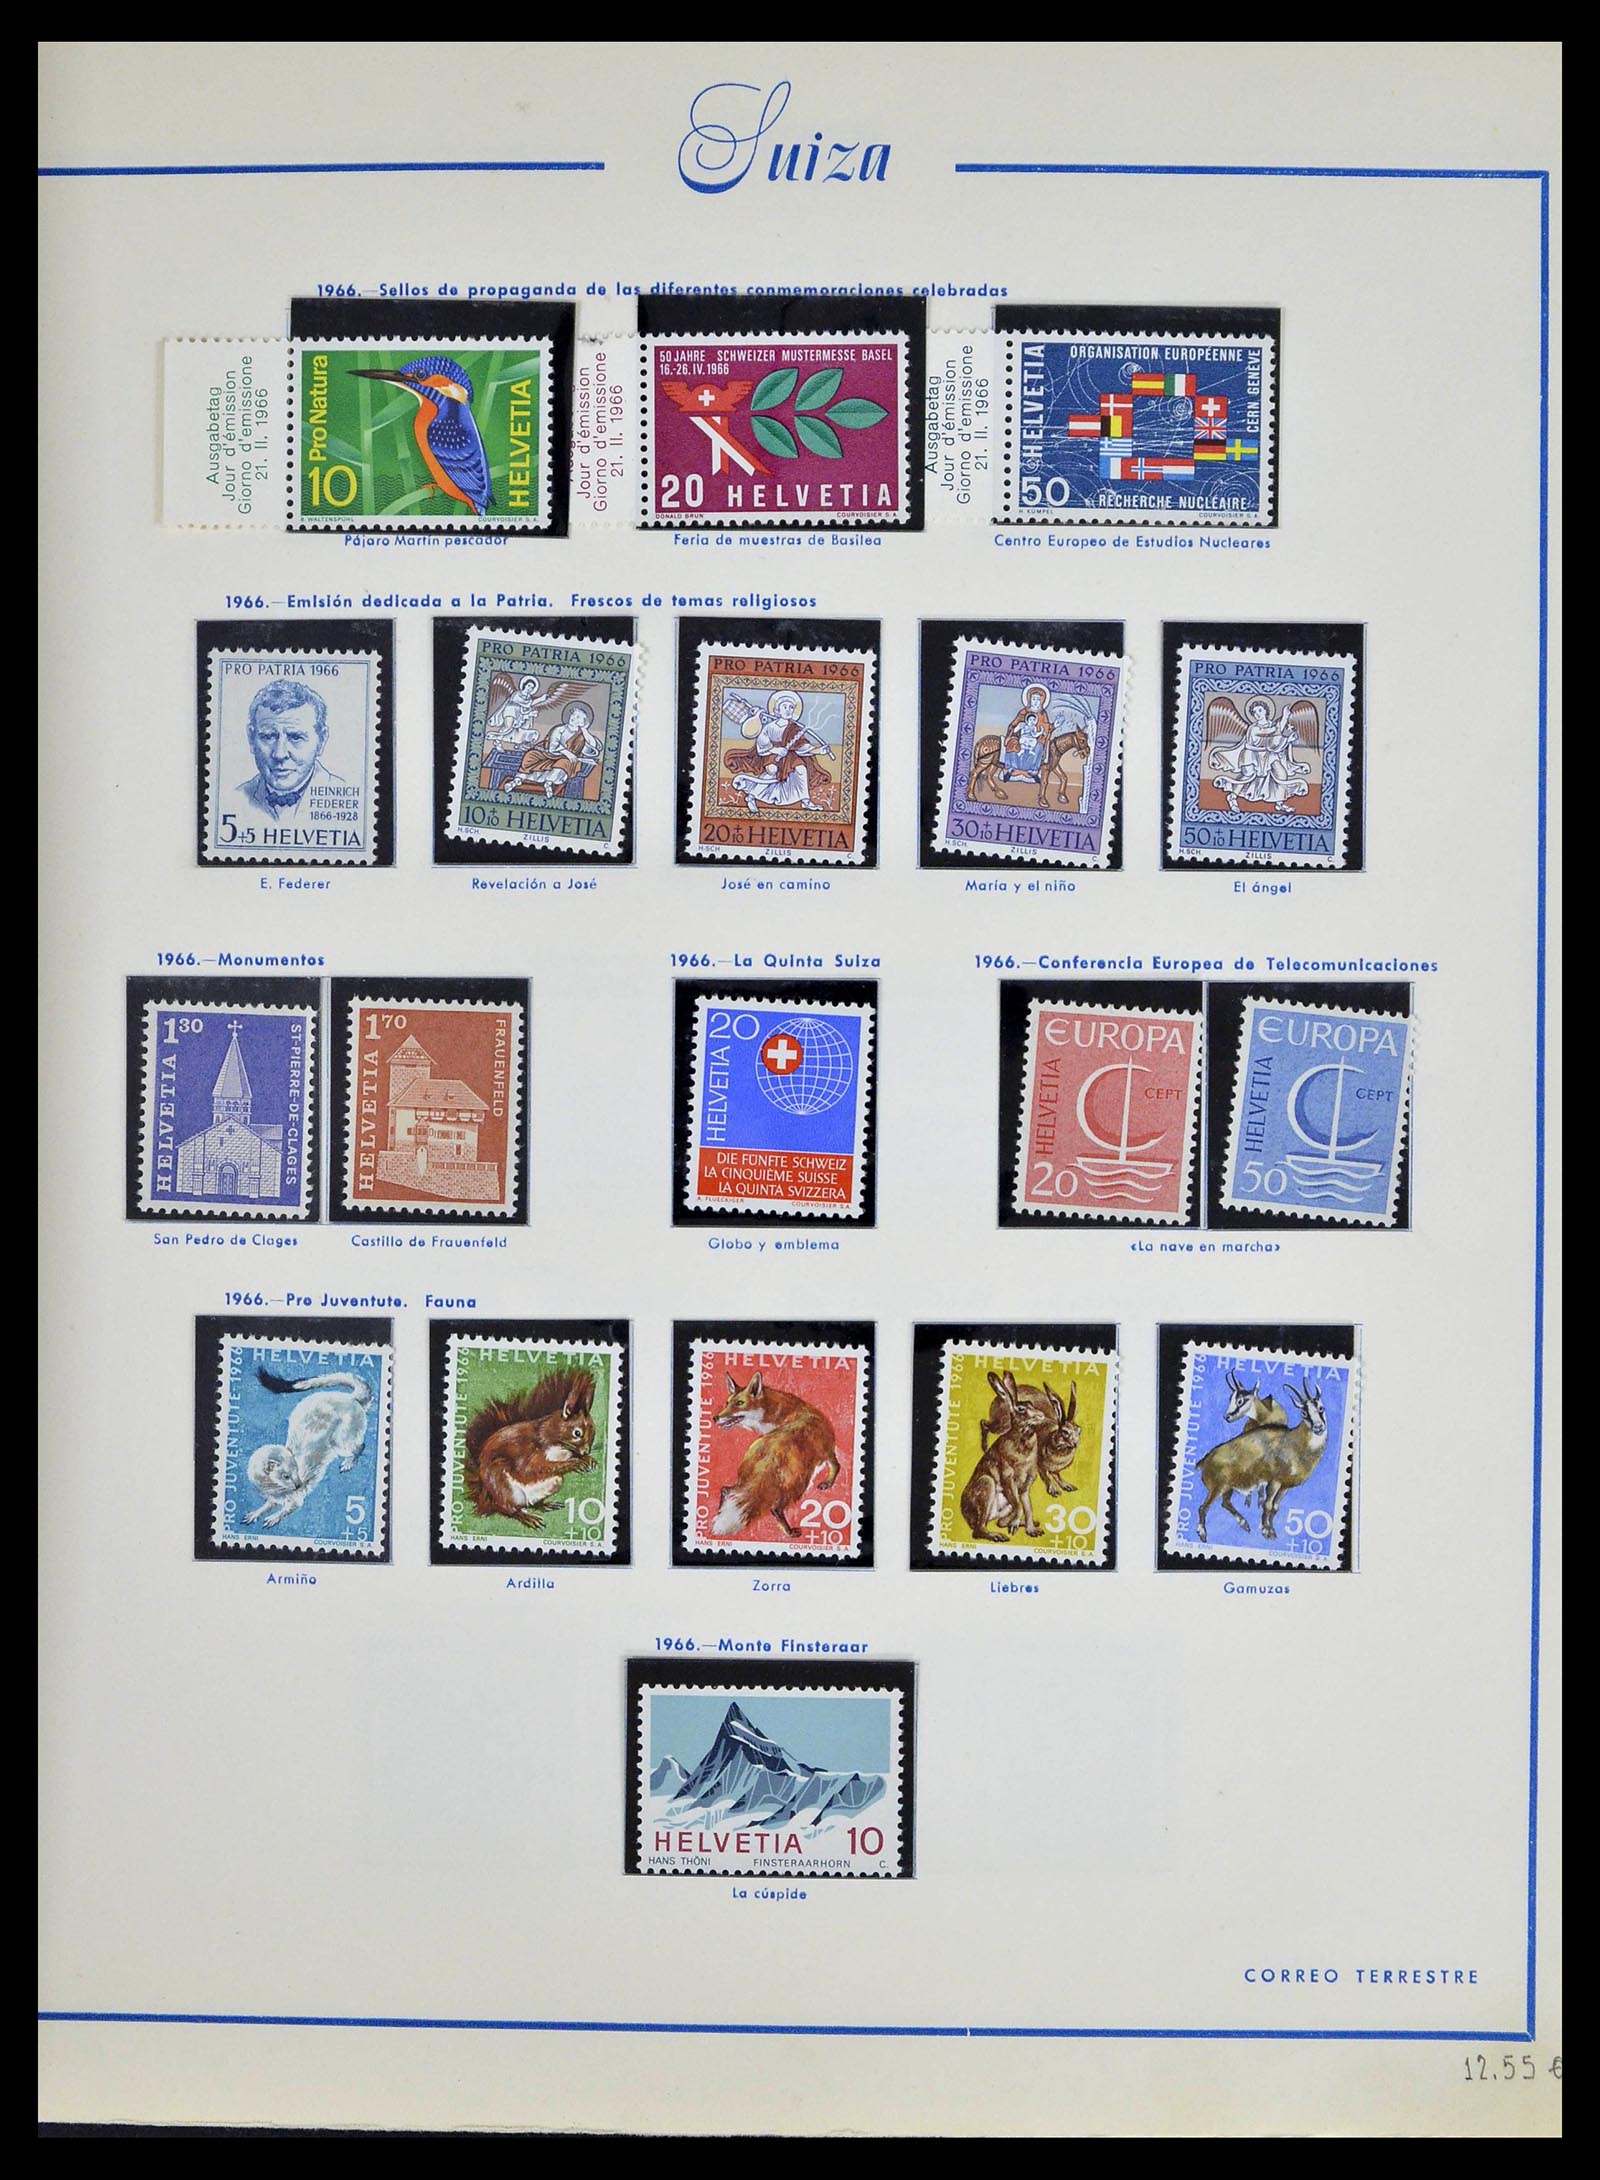 39217 0045 - Stamp collection 39217 Switzerland 1850-1986.